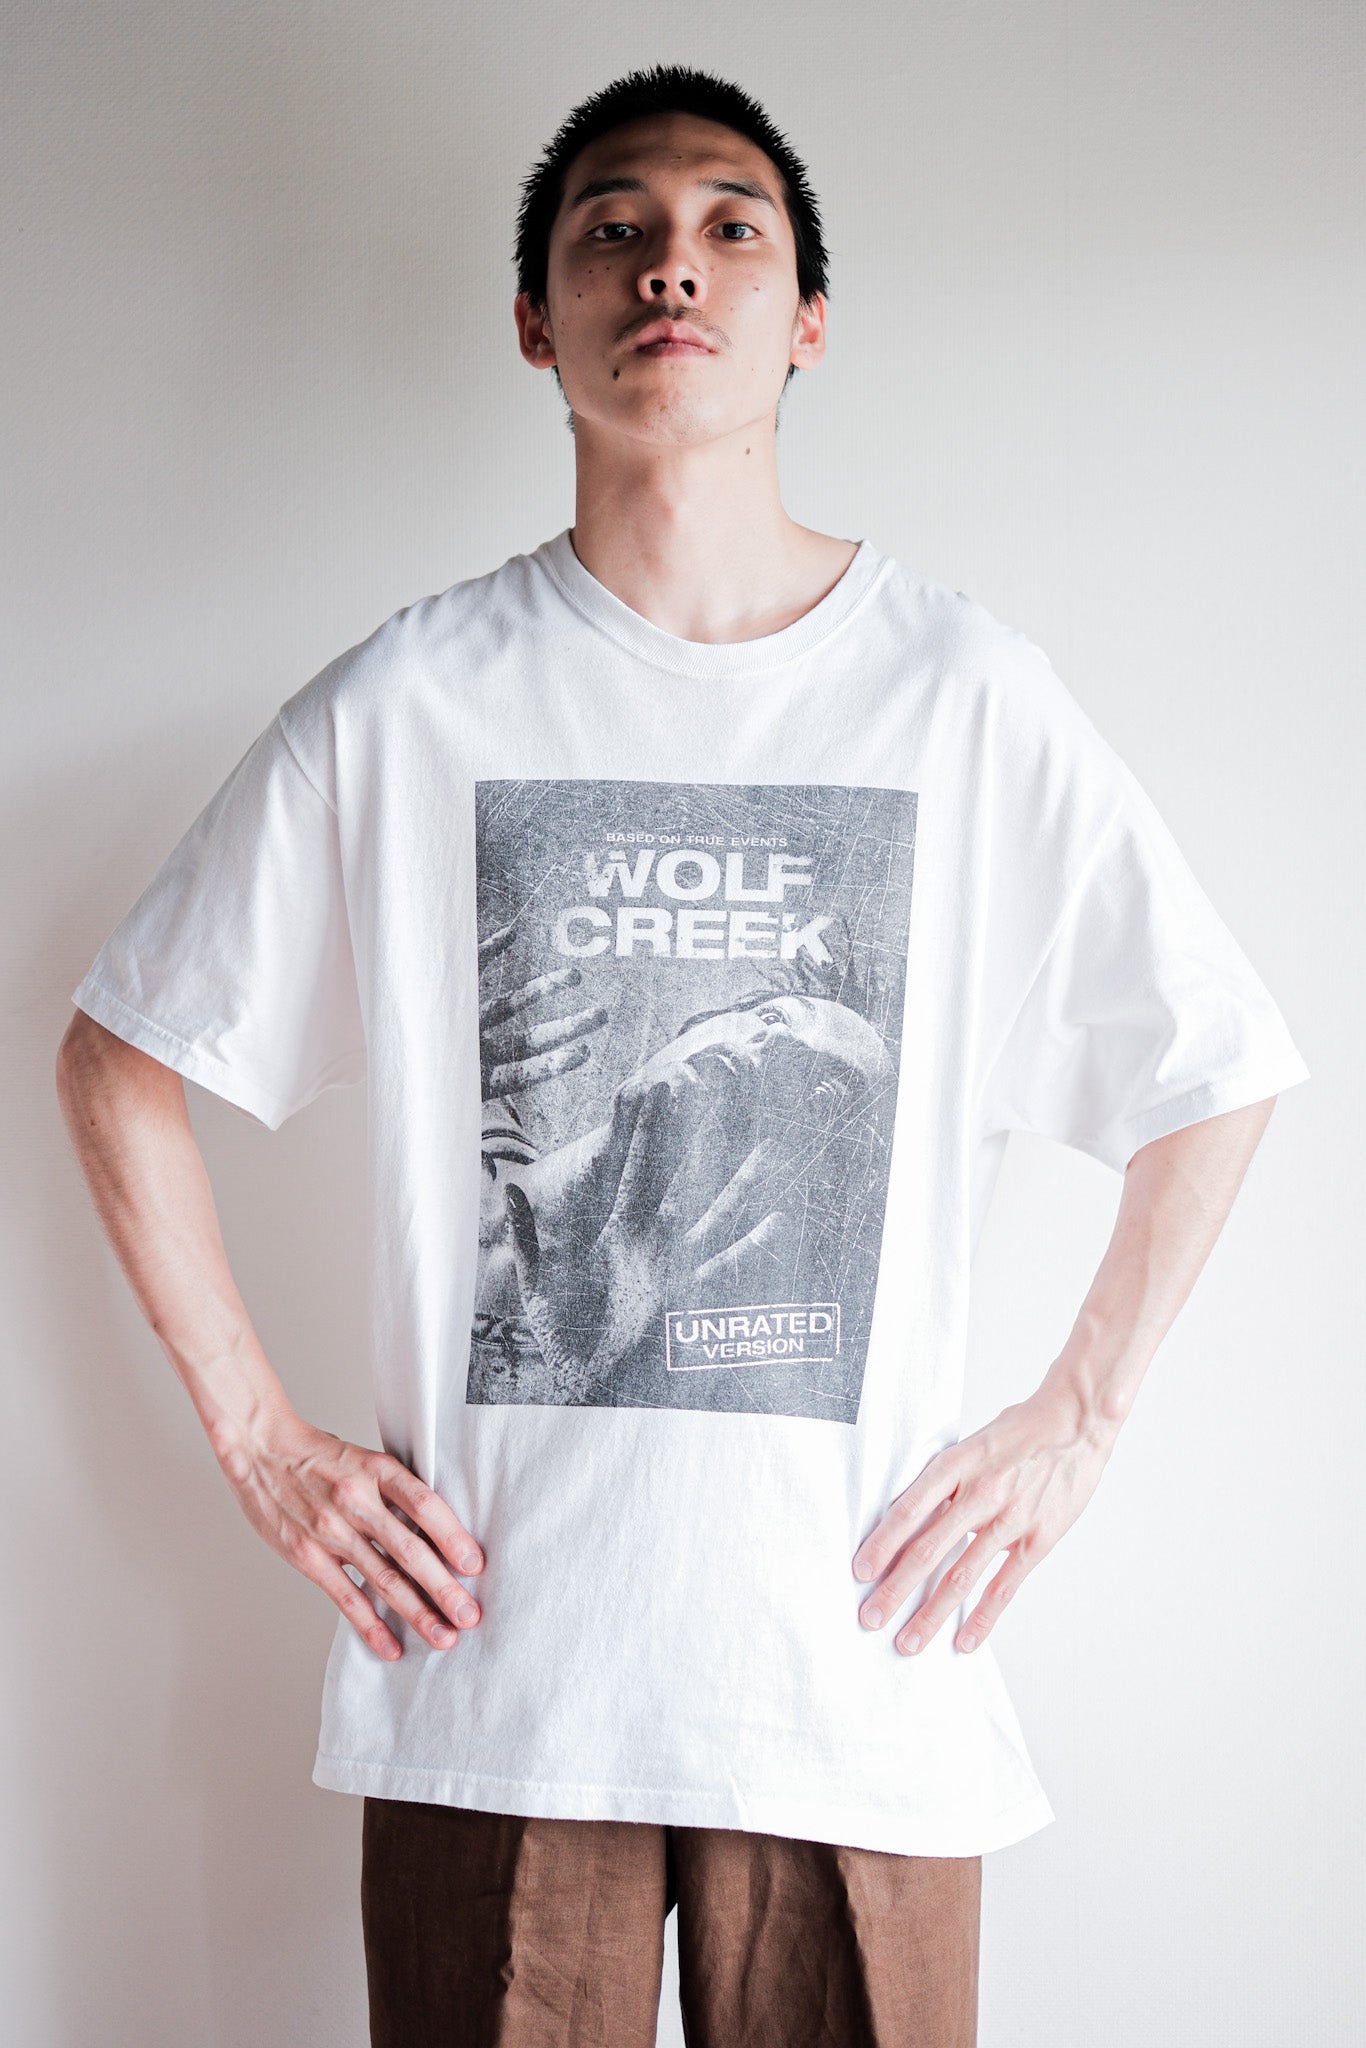 00's】Vintage Movie Print T-shirt Size.L WOLF CREEK